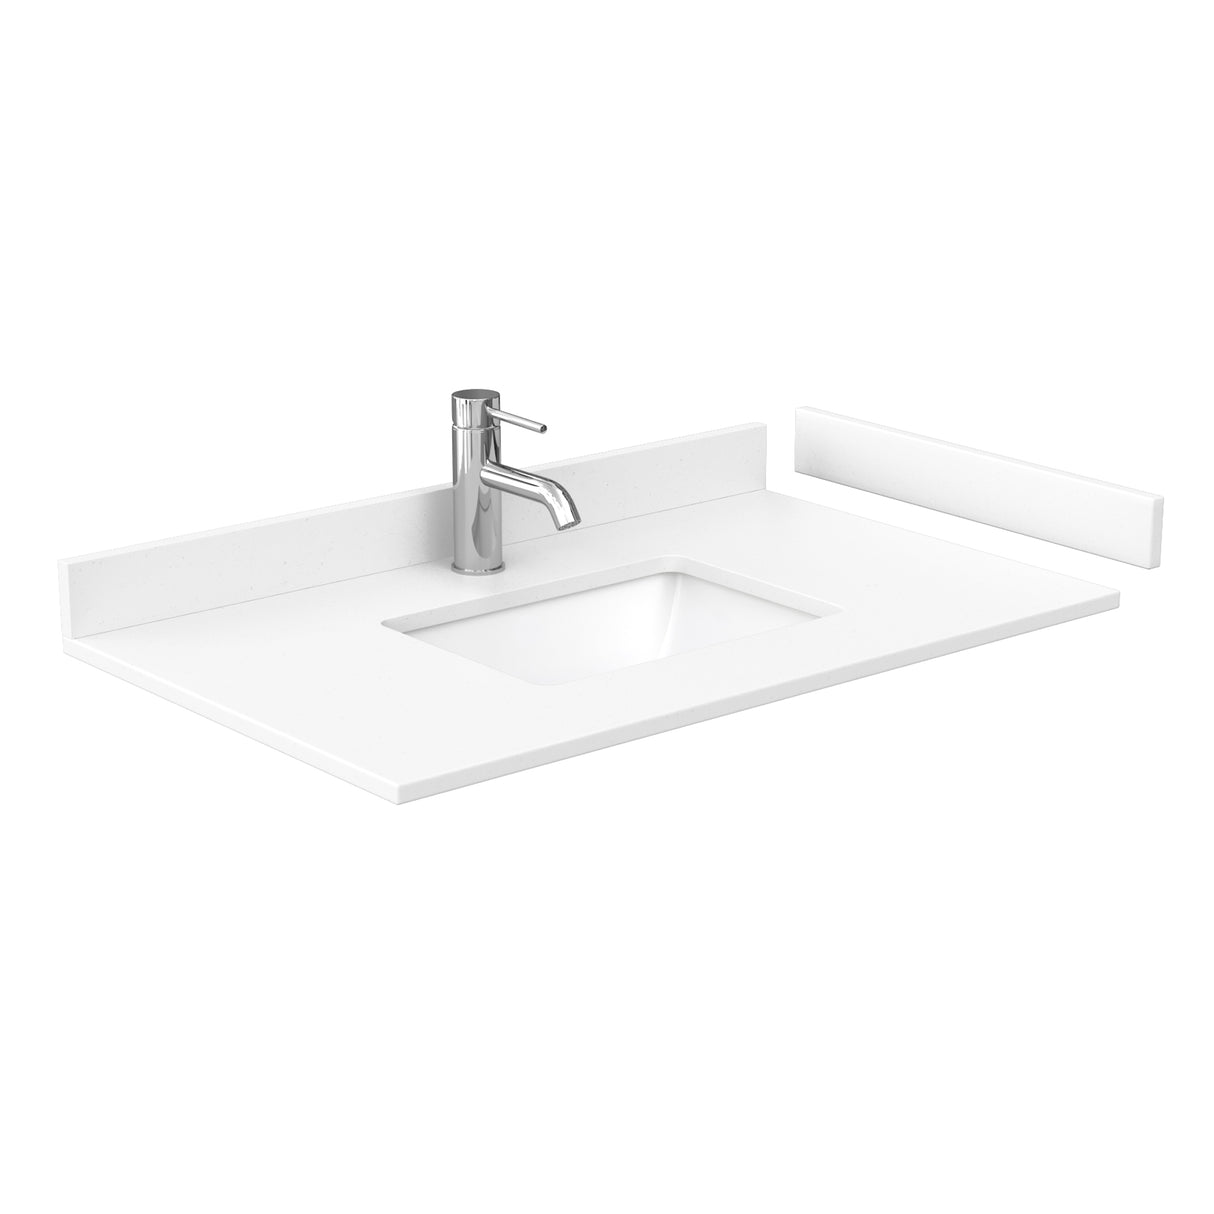 Miranda 36 Inch Single Bathroom Vanity in White White Cultured Marble Countertop Undermount Square Sink Brushed Nickel Trim